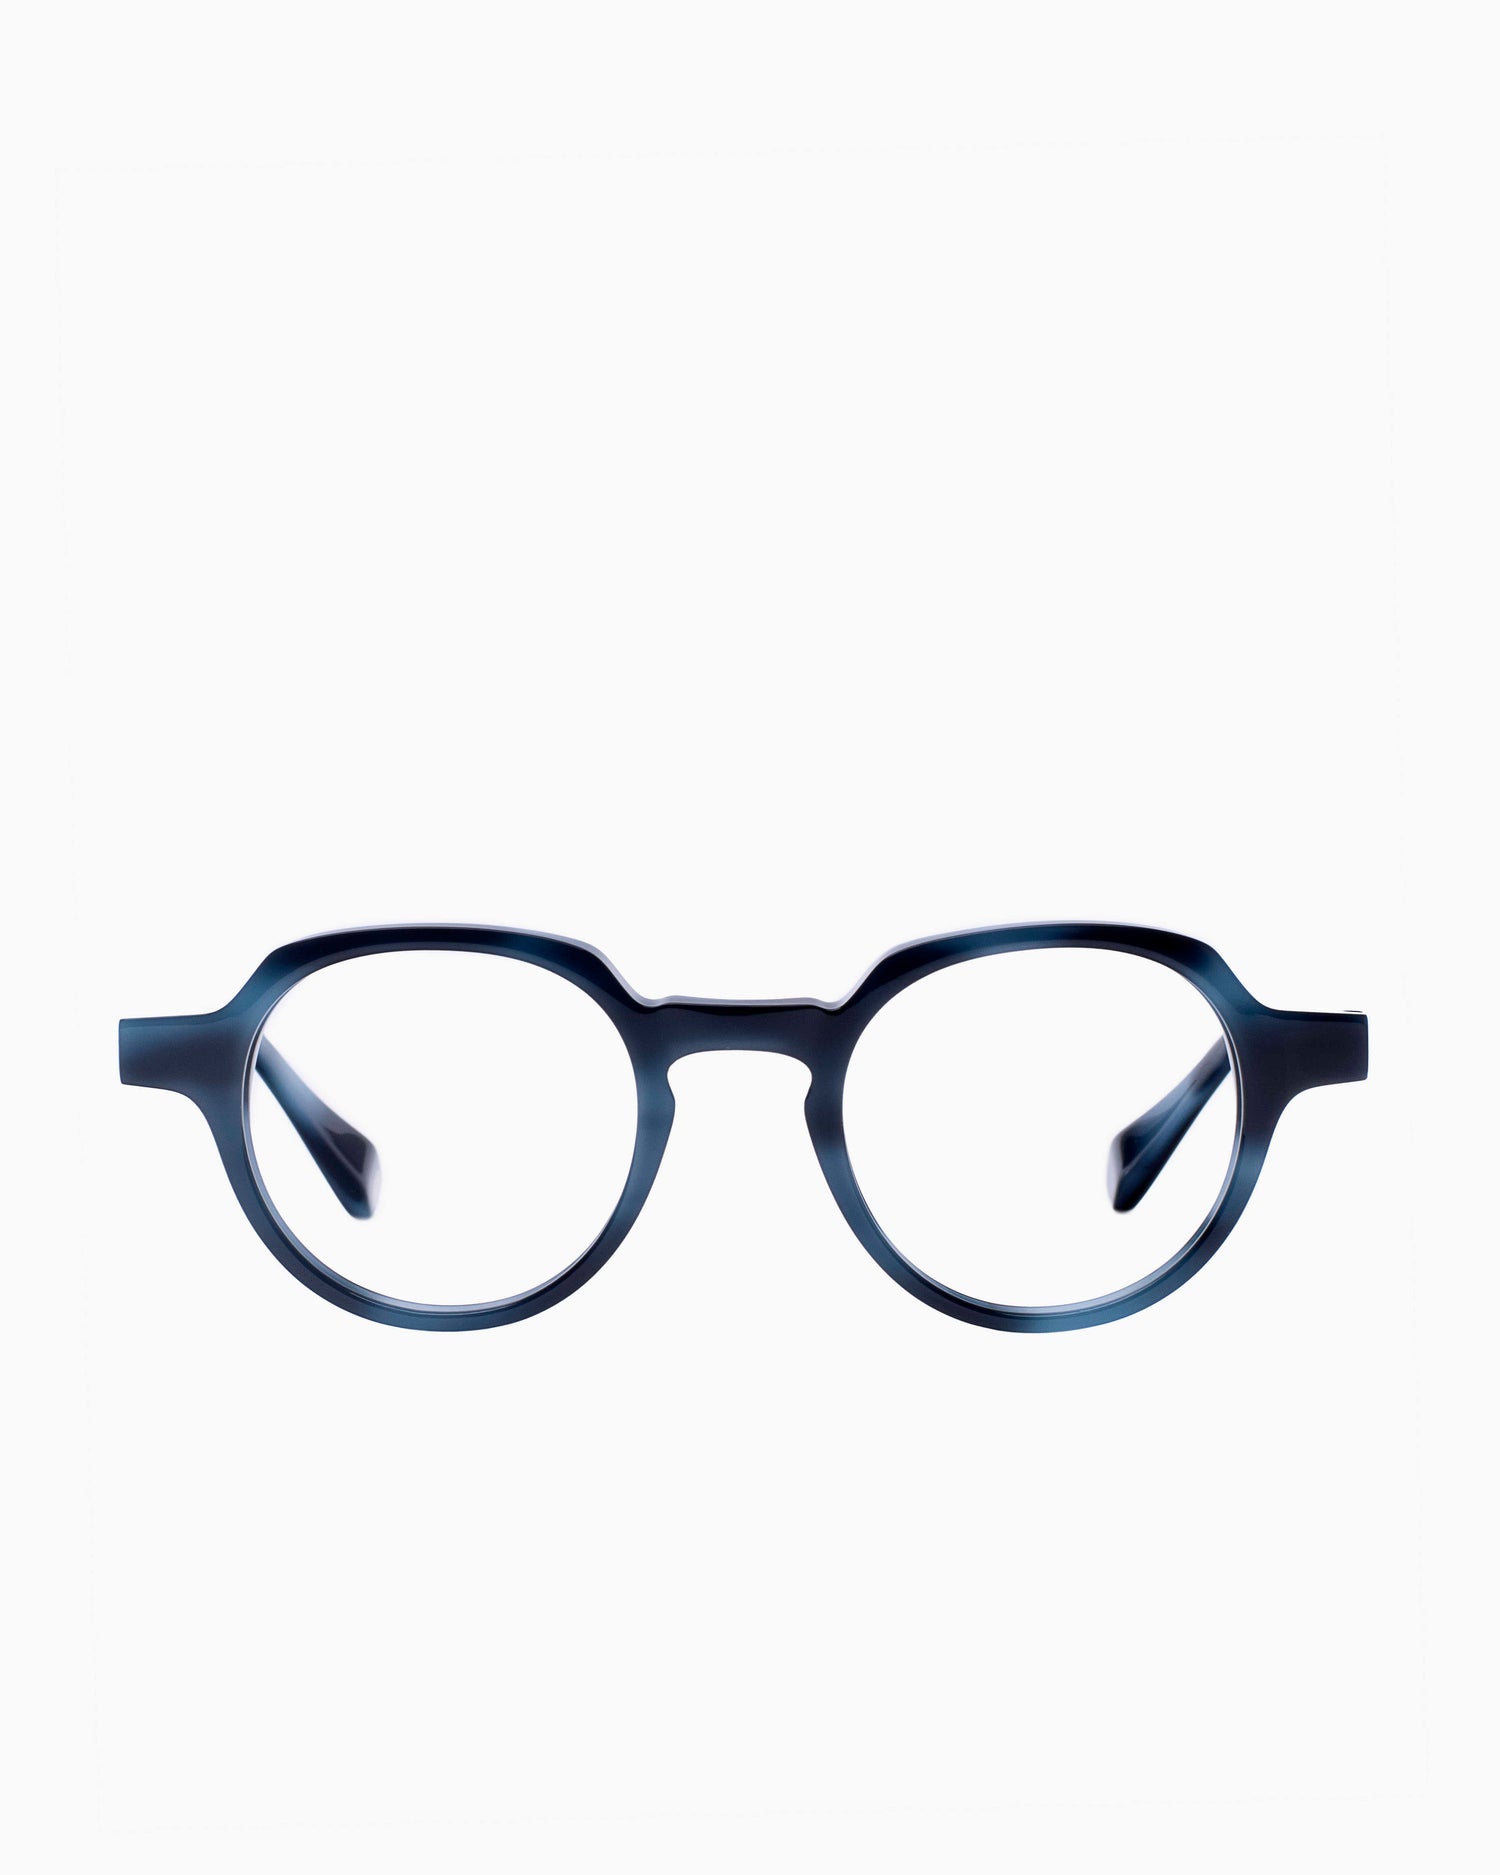 Francois Pinton - Haussmann4 - Bb | glasses bar:  Marie-Sophie Dion